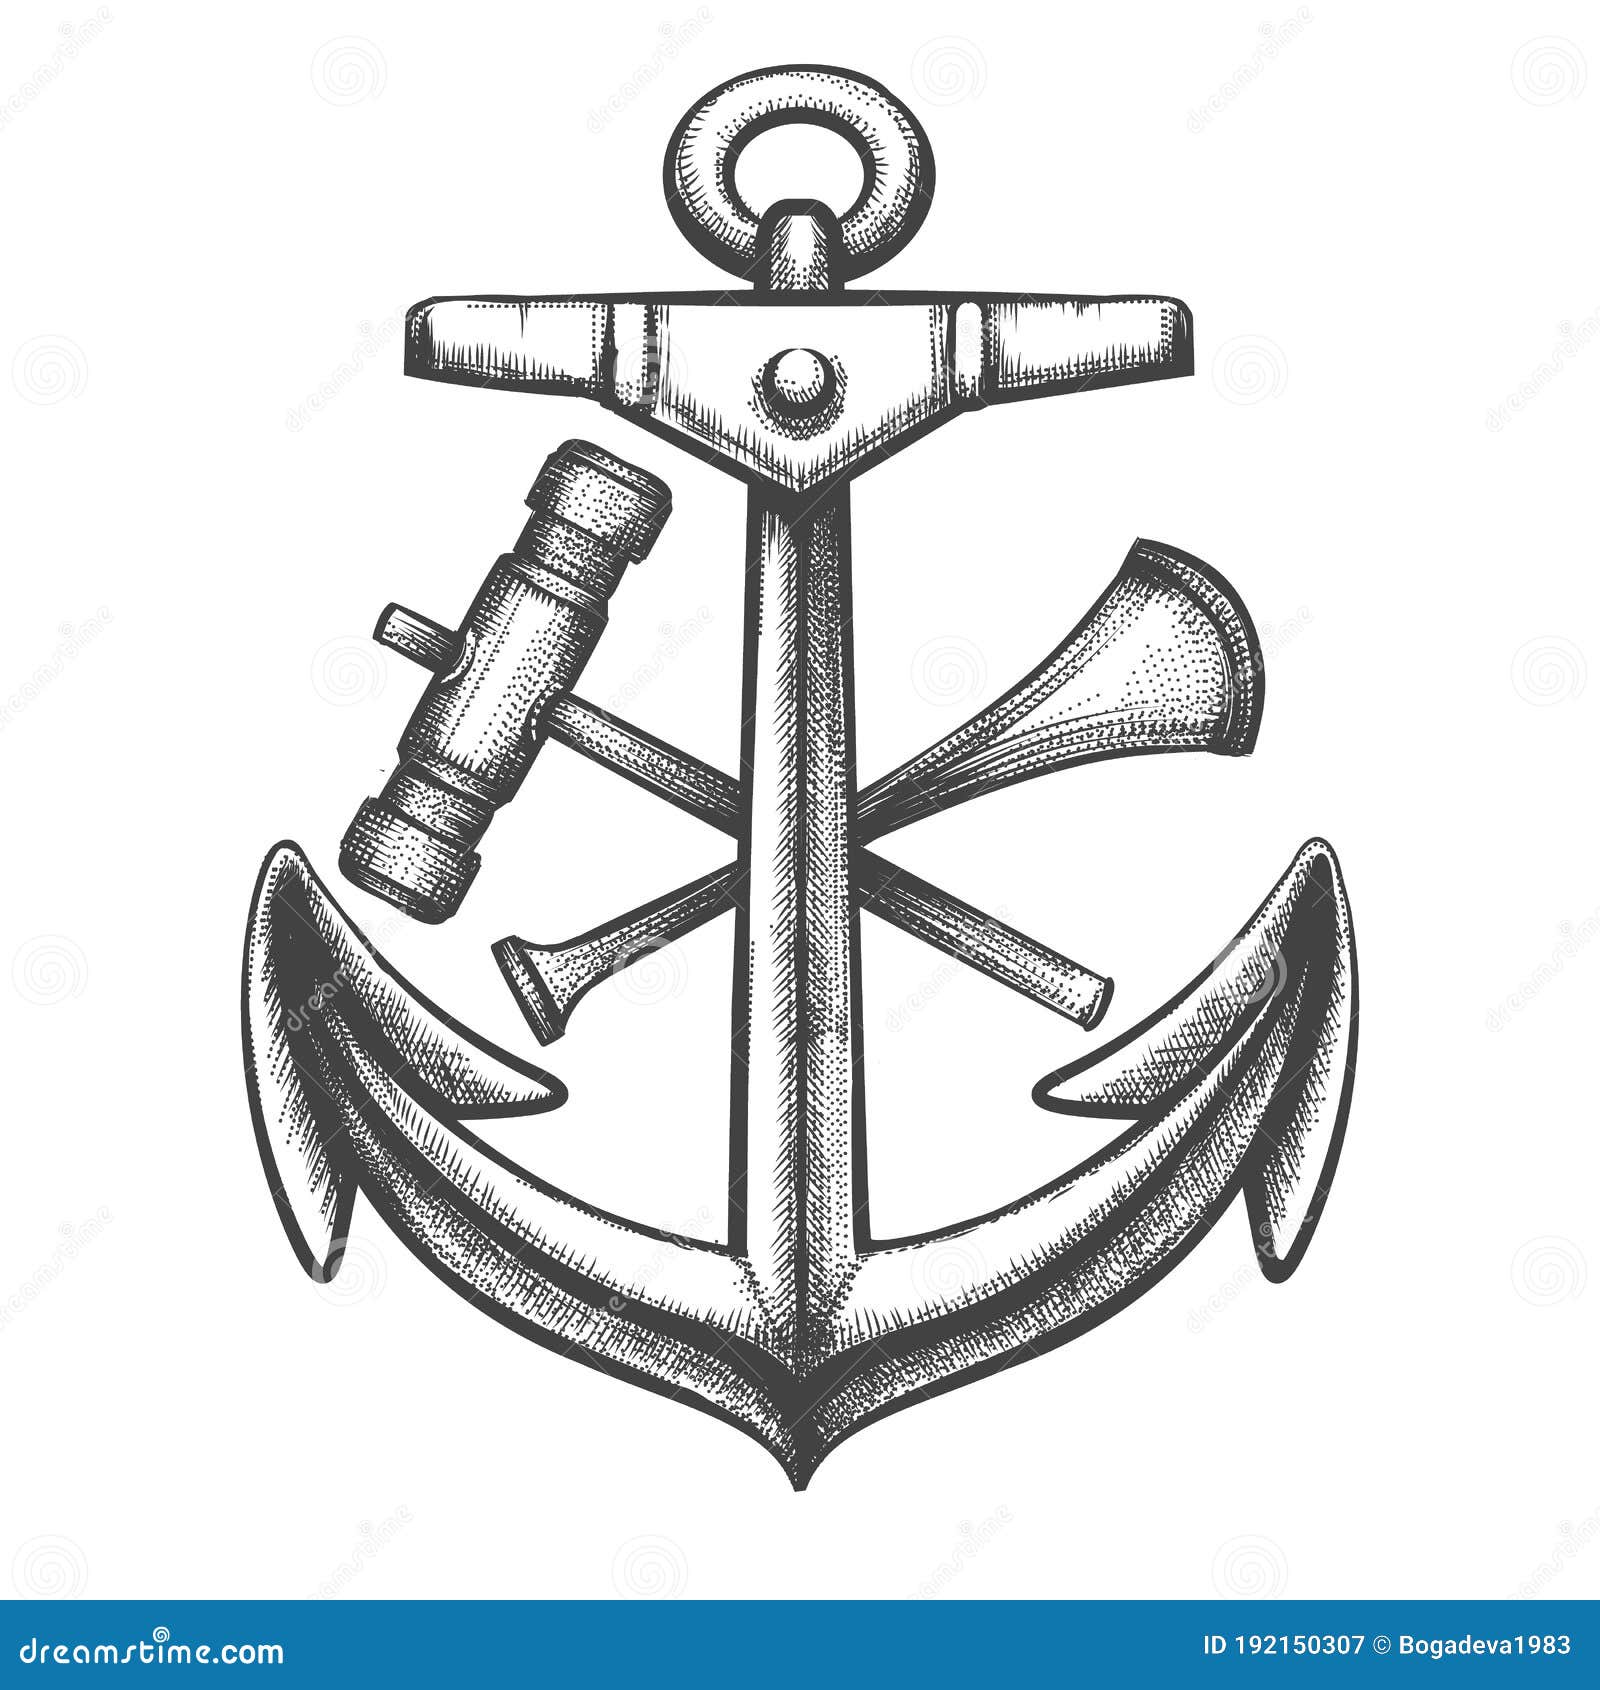 Anchor and Shipyard Tools Sailor Tattoo Stock Vector - Illustration of ...